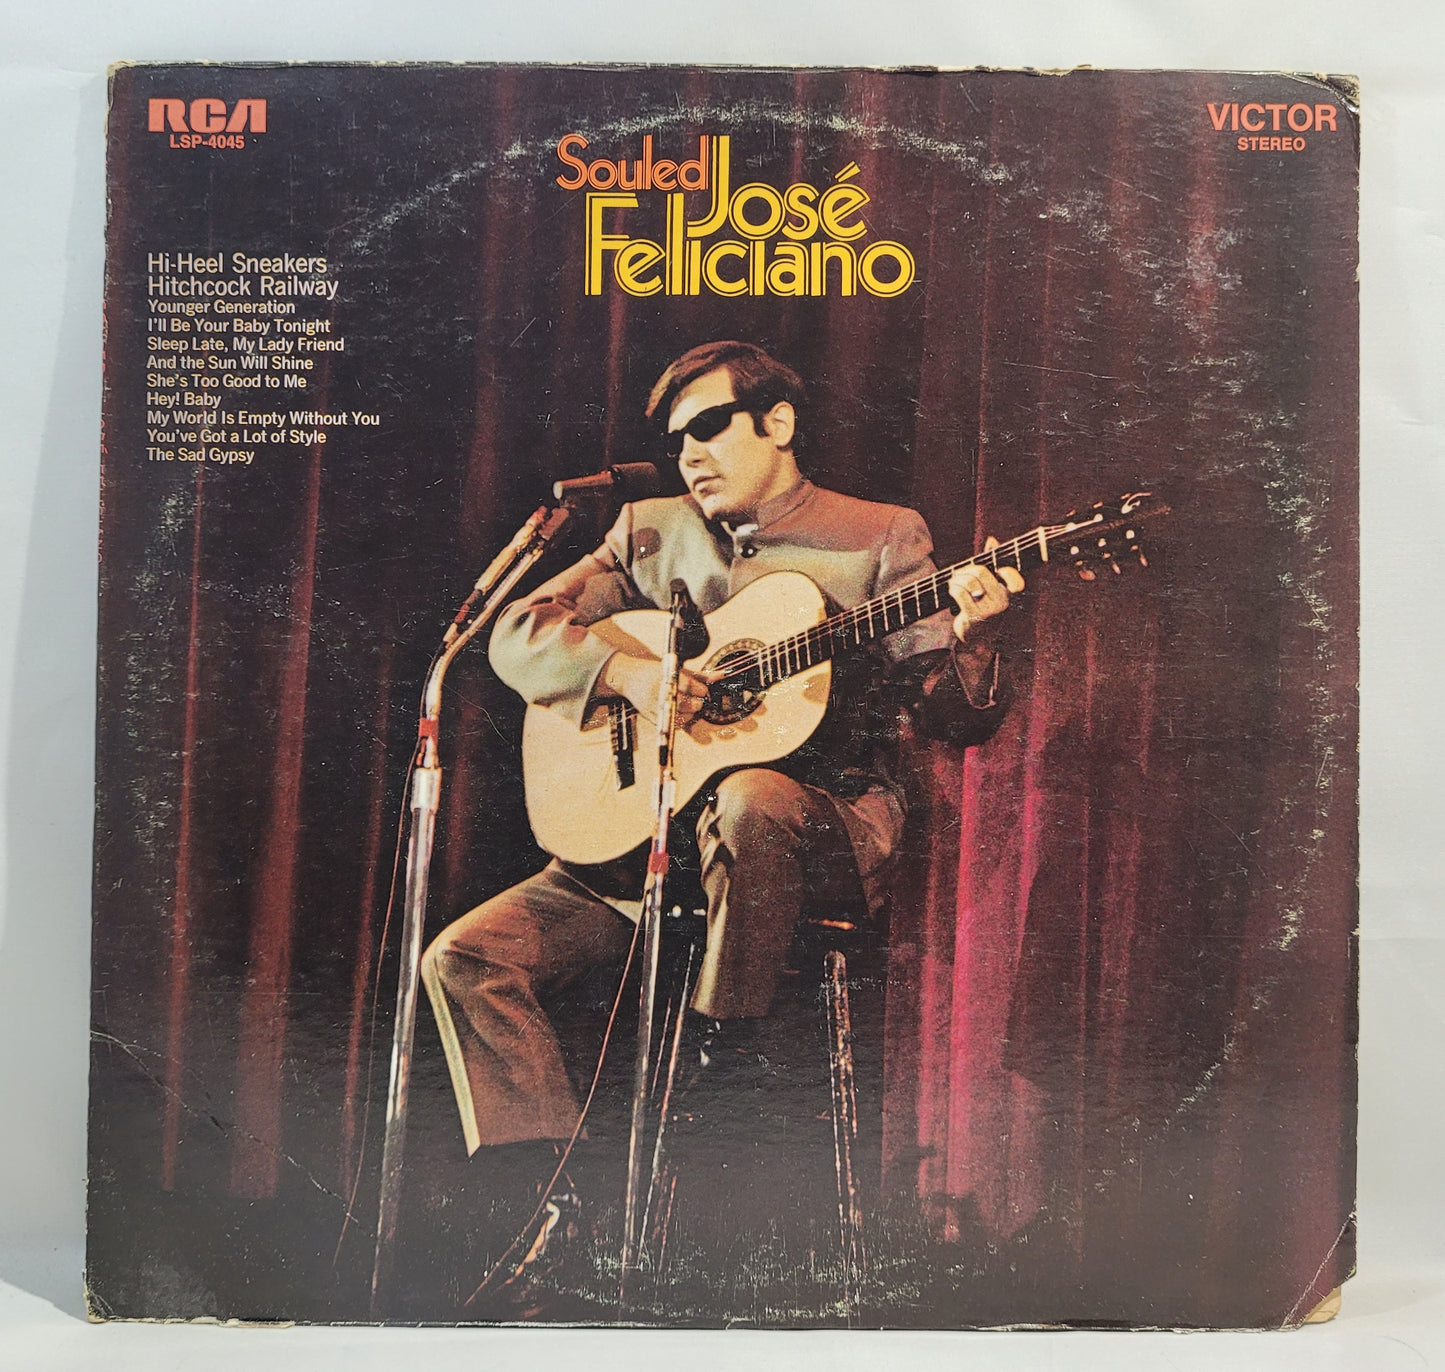 Jose Feliciano - Souled [Vinyl Record LP]